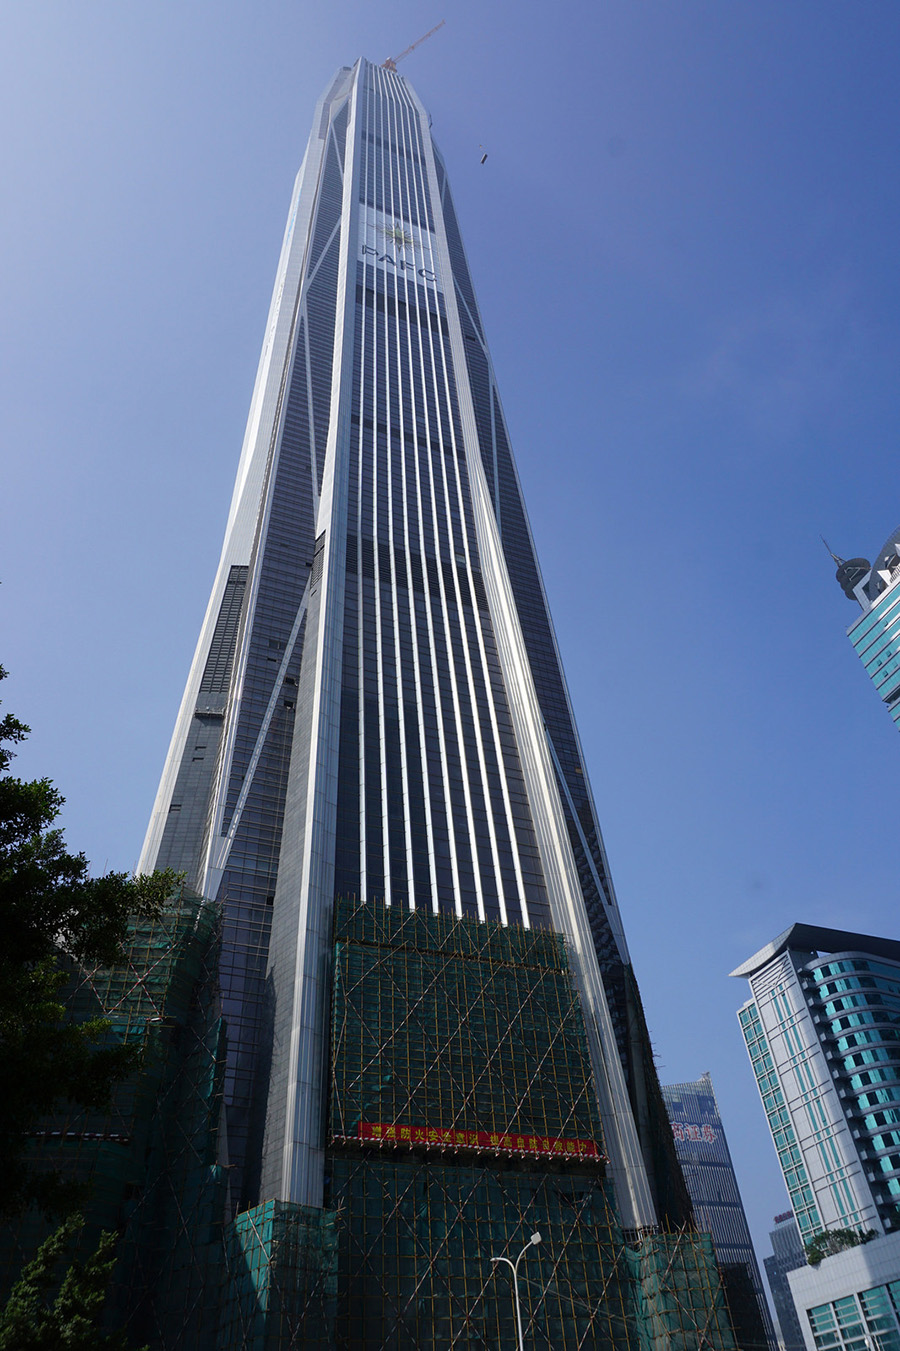 Ping An Finance Tower